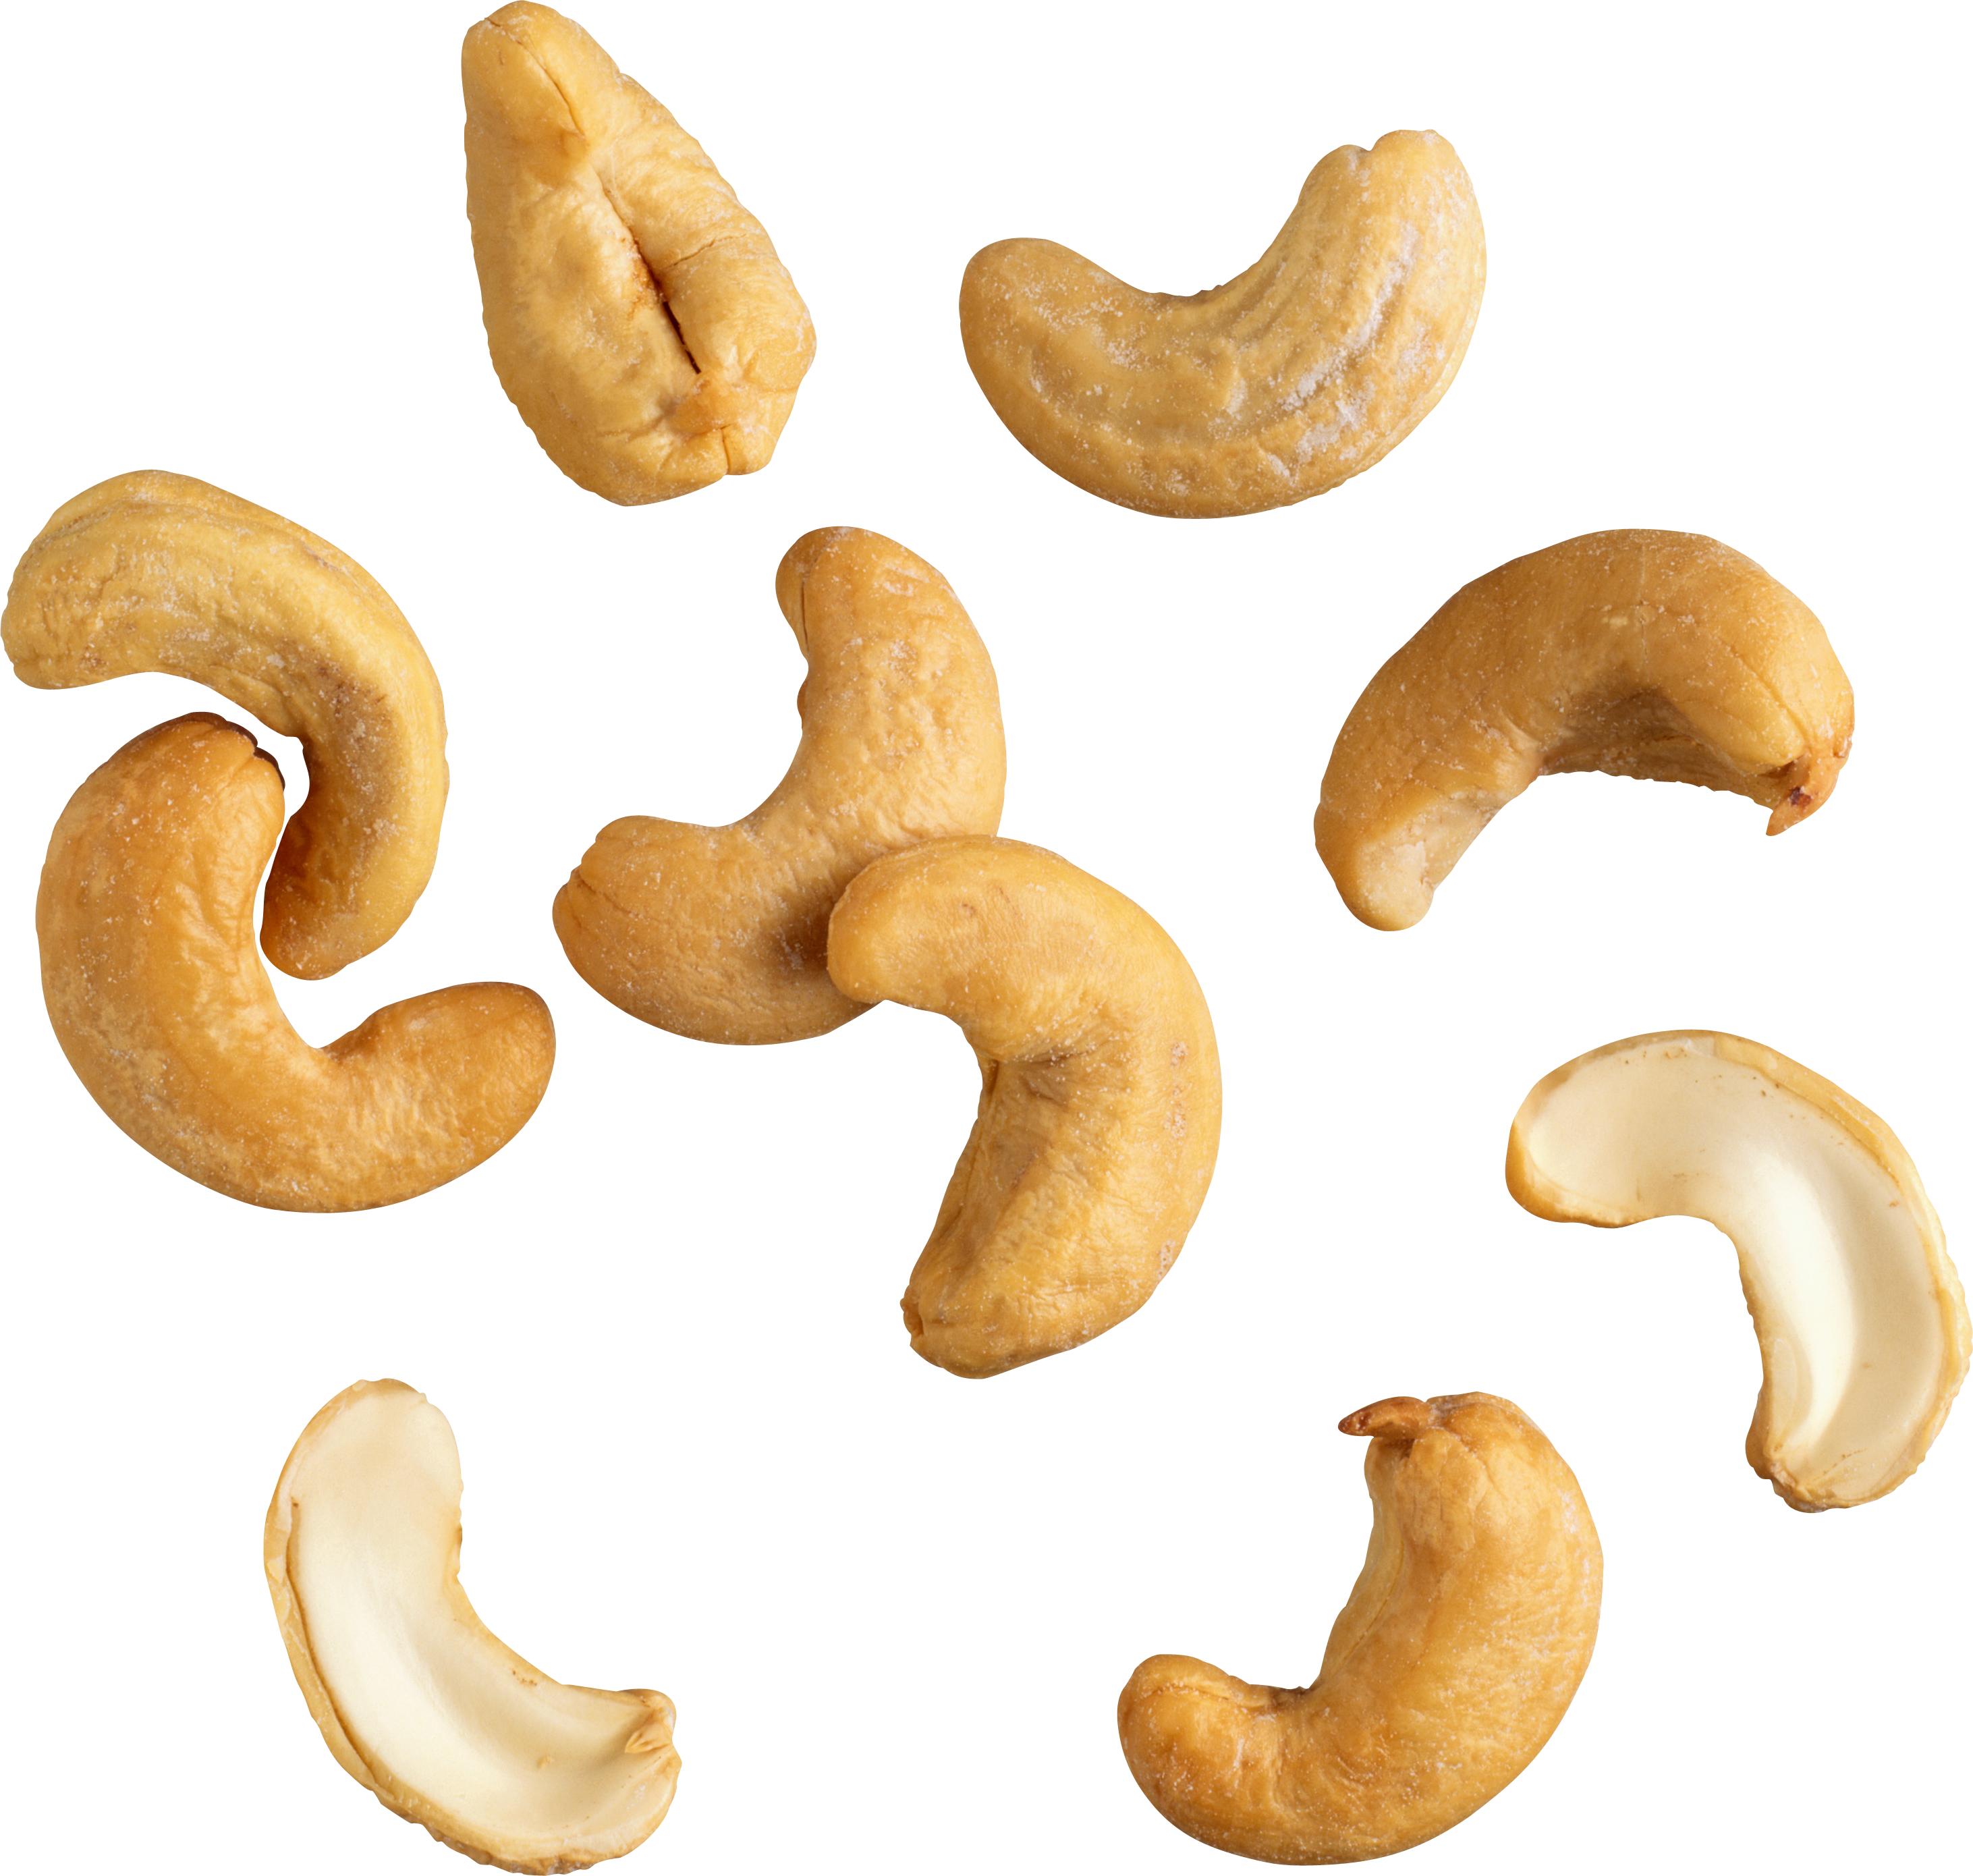 Picture #1765205 - nut clipart cashew nut. nut clipart cashew nut. 